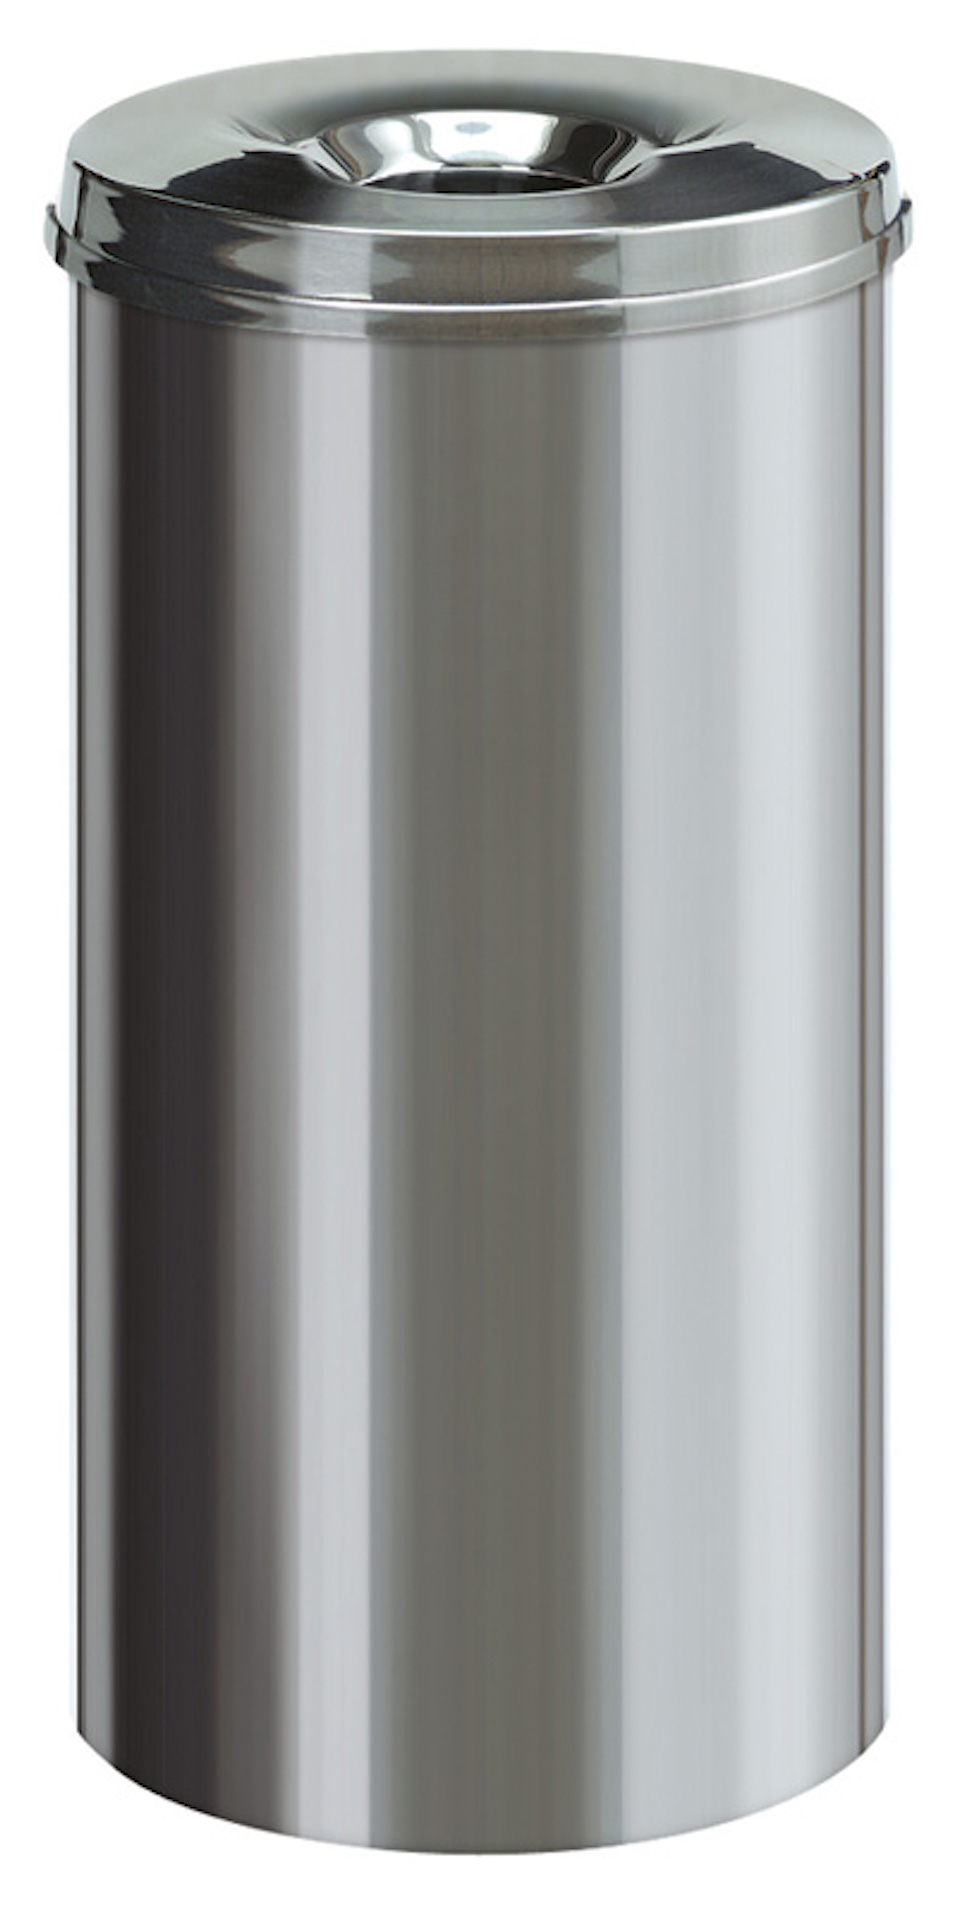 Selbstlöschender Papierkorb & Abfallsammler aus Edelstahl | 50 Liter, HxØ 62,5x33,5cm | Silber